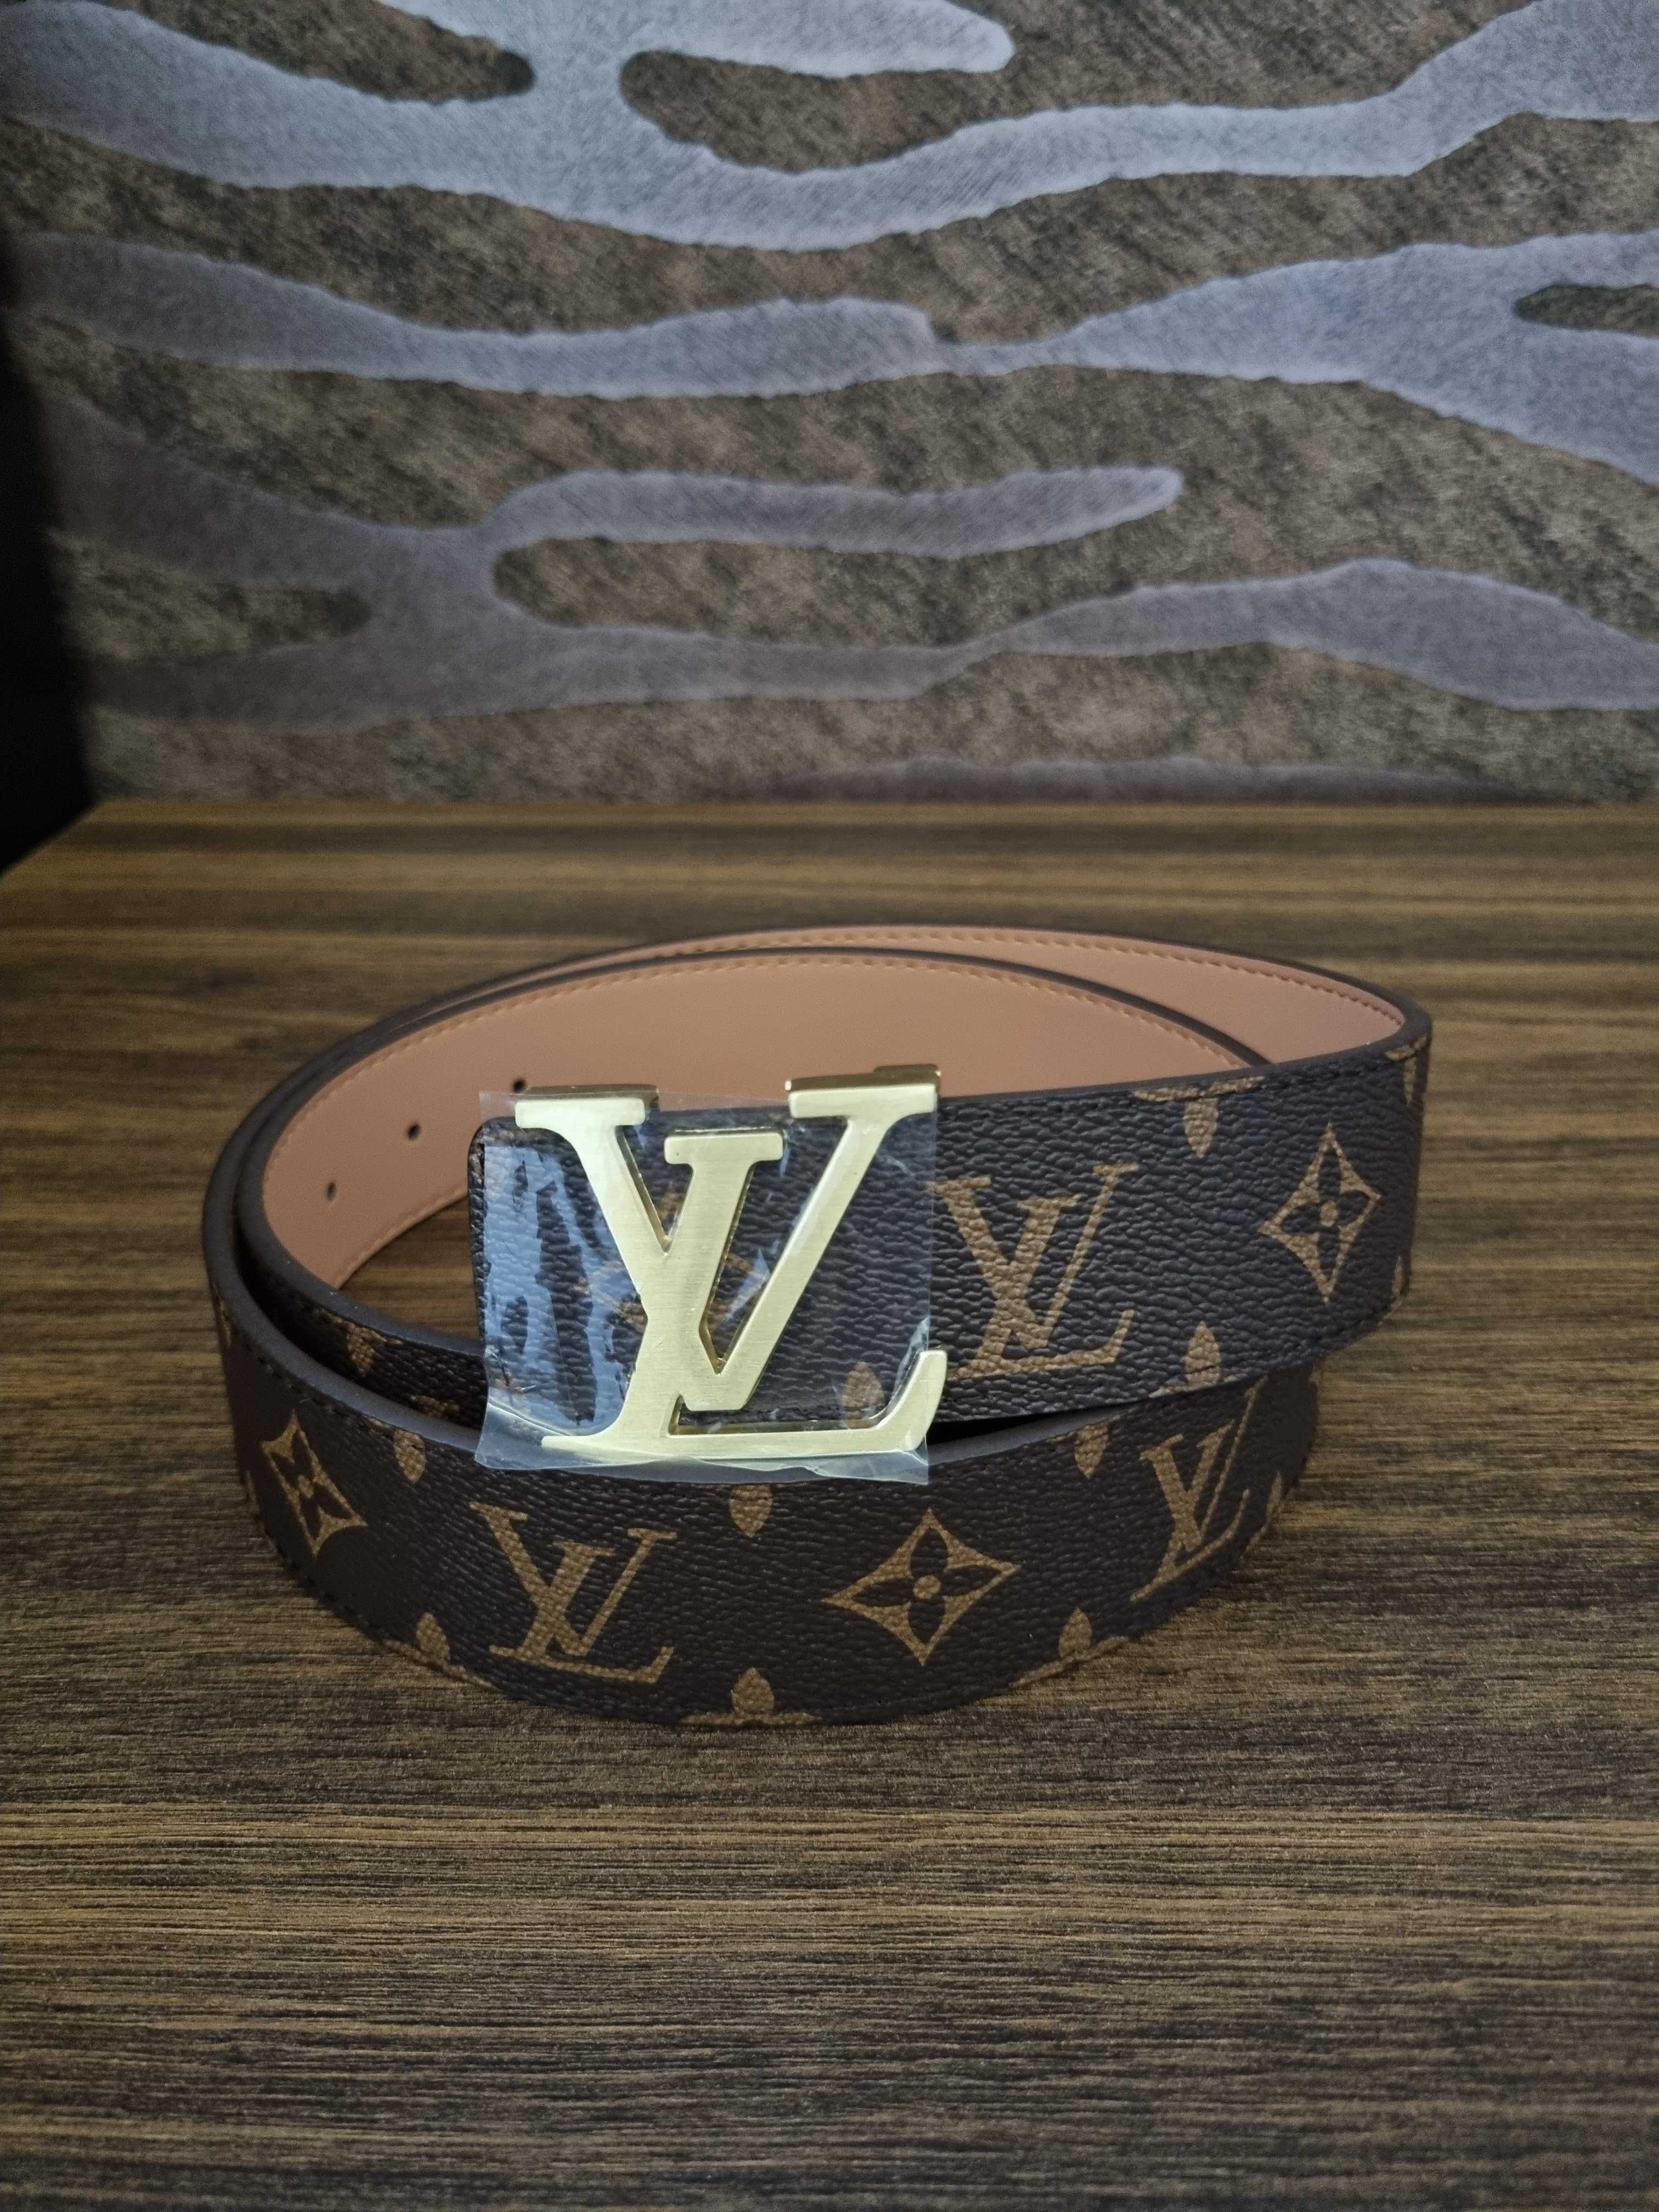 Louis Vuitton pasek do spodni 115cm/46 LV belt brązowy NOWY + GRATIS